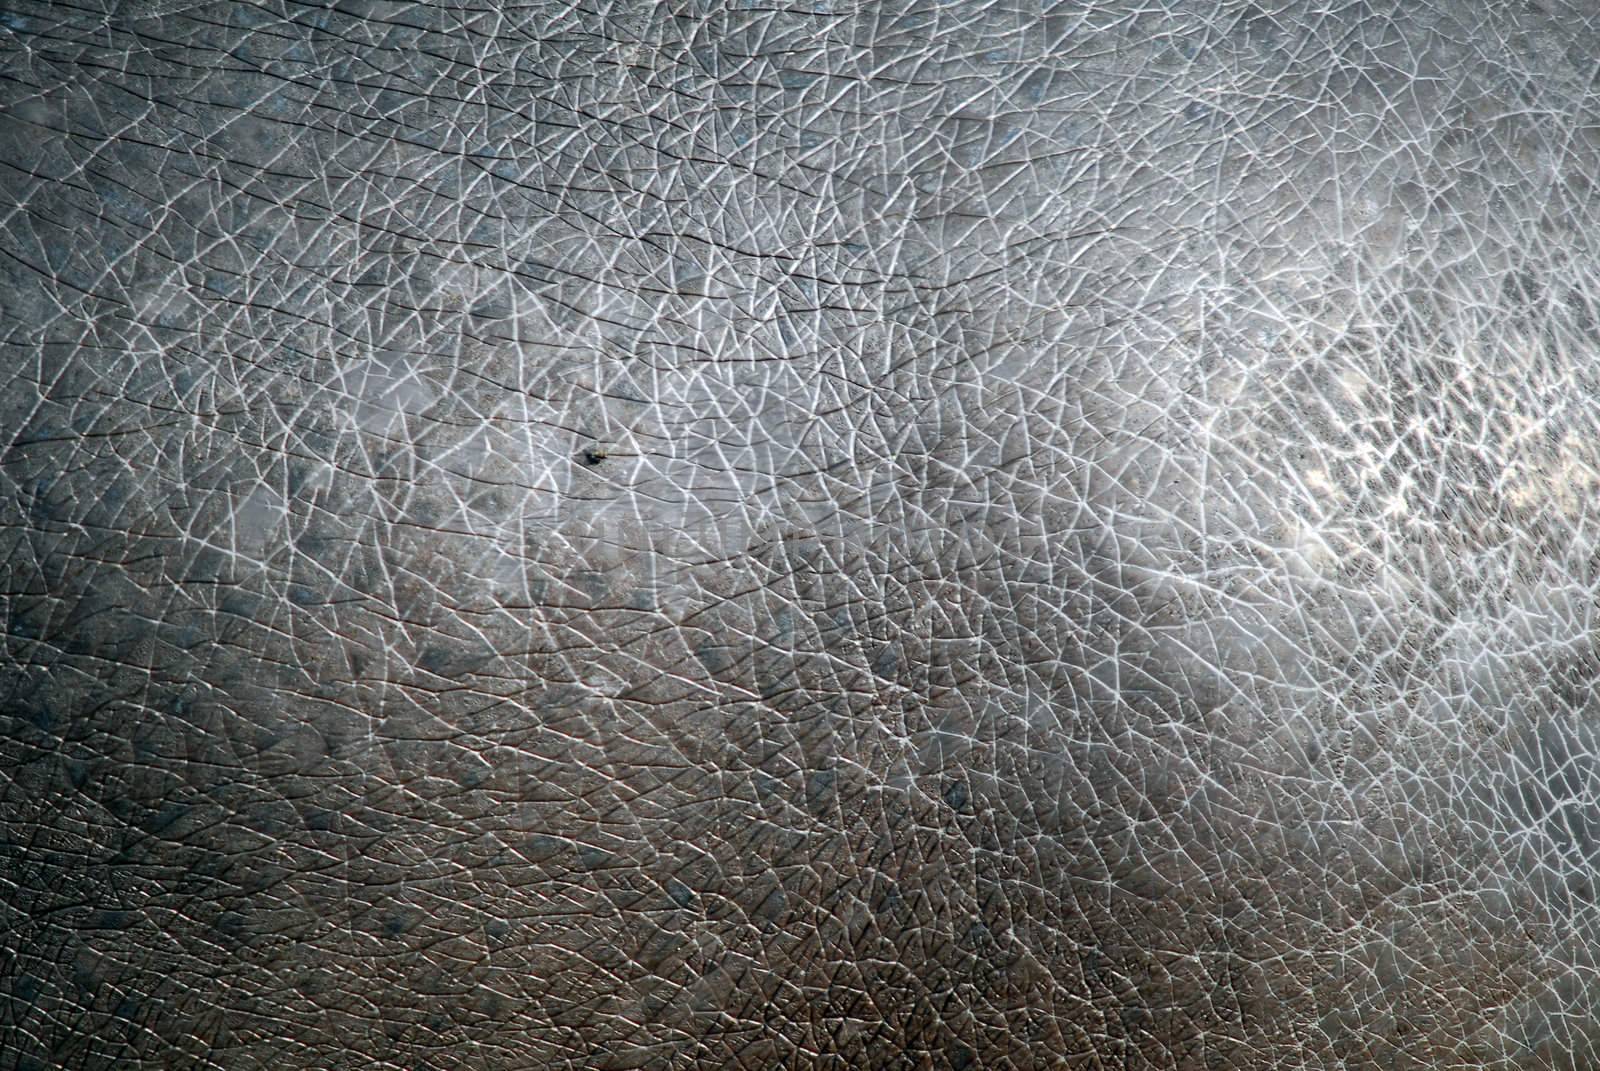 Hippopotamus skin by nialat